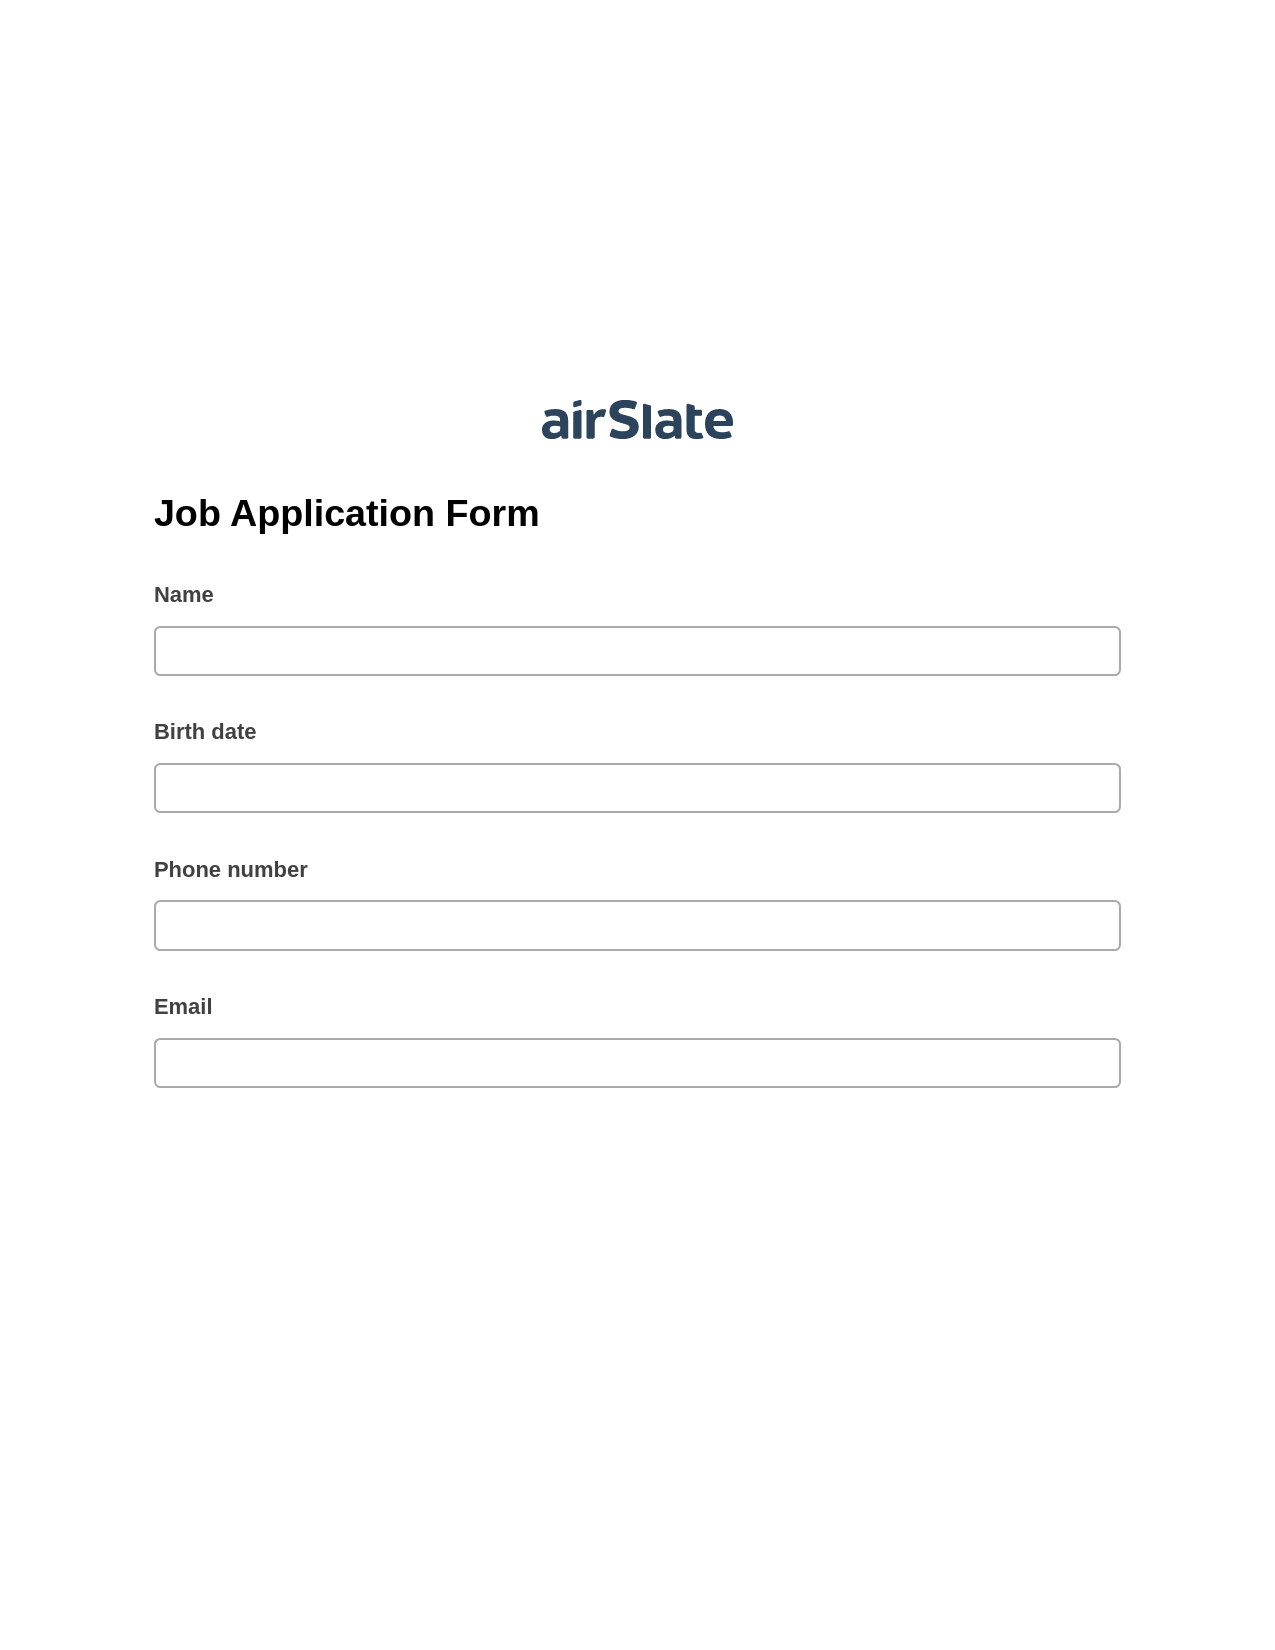 Multirole Job Application Form Pre-fill from MySQL Bot, Webhook Bot, Export to MySQL Bot